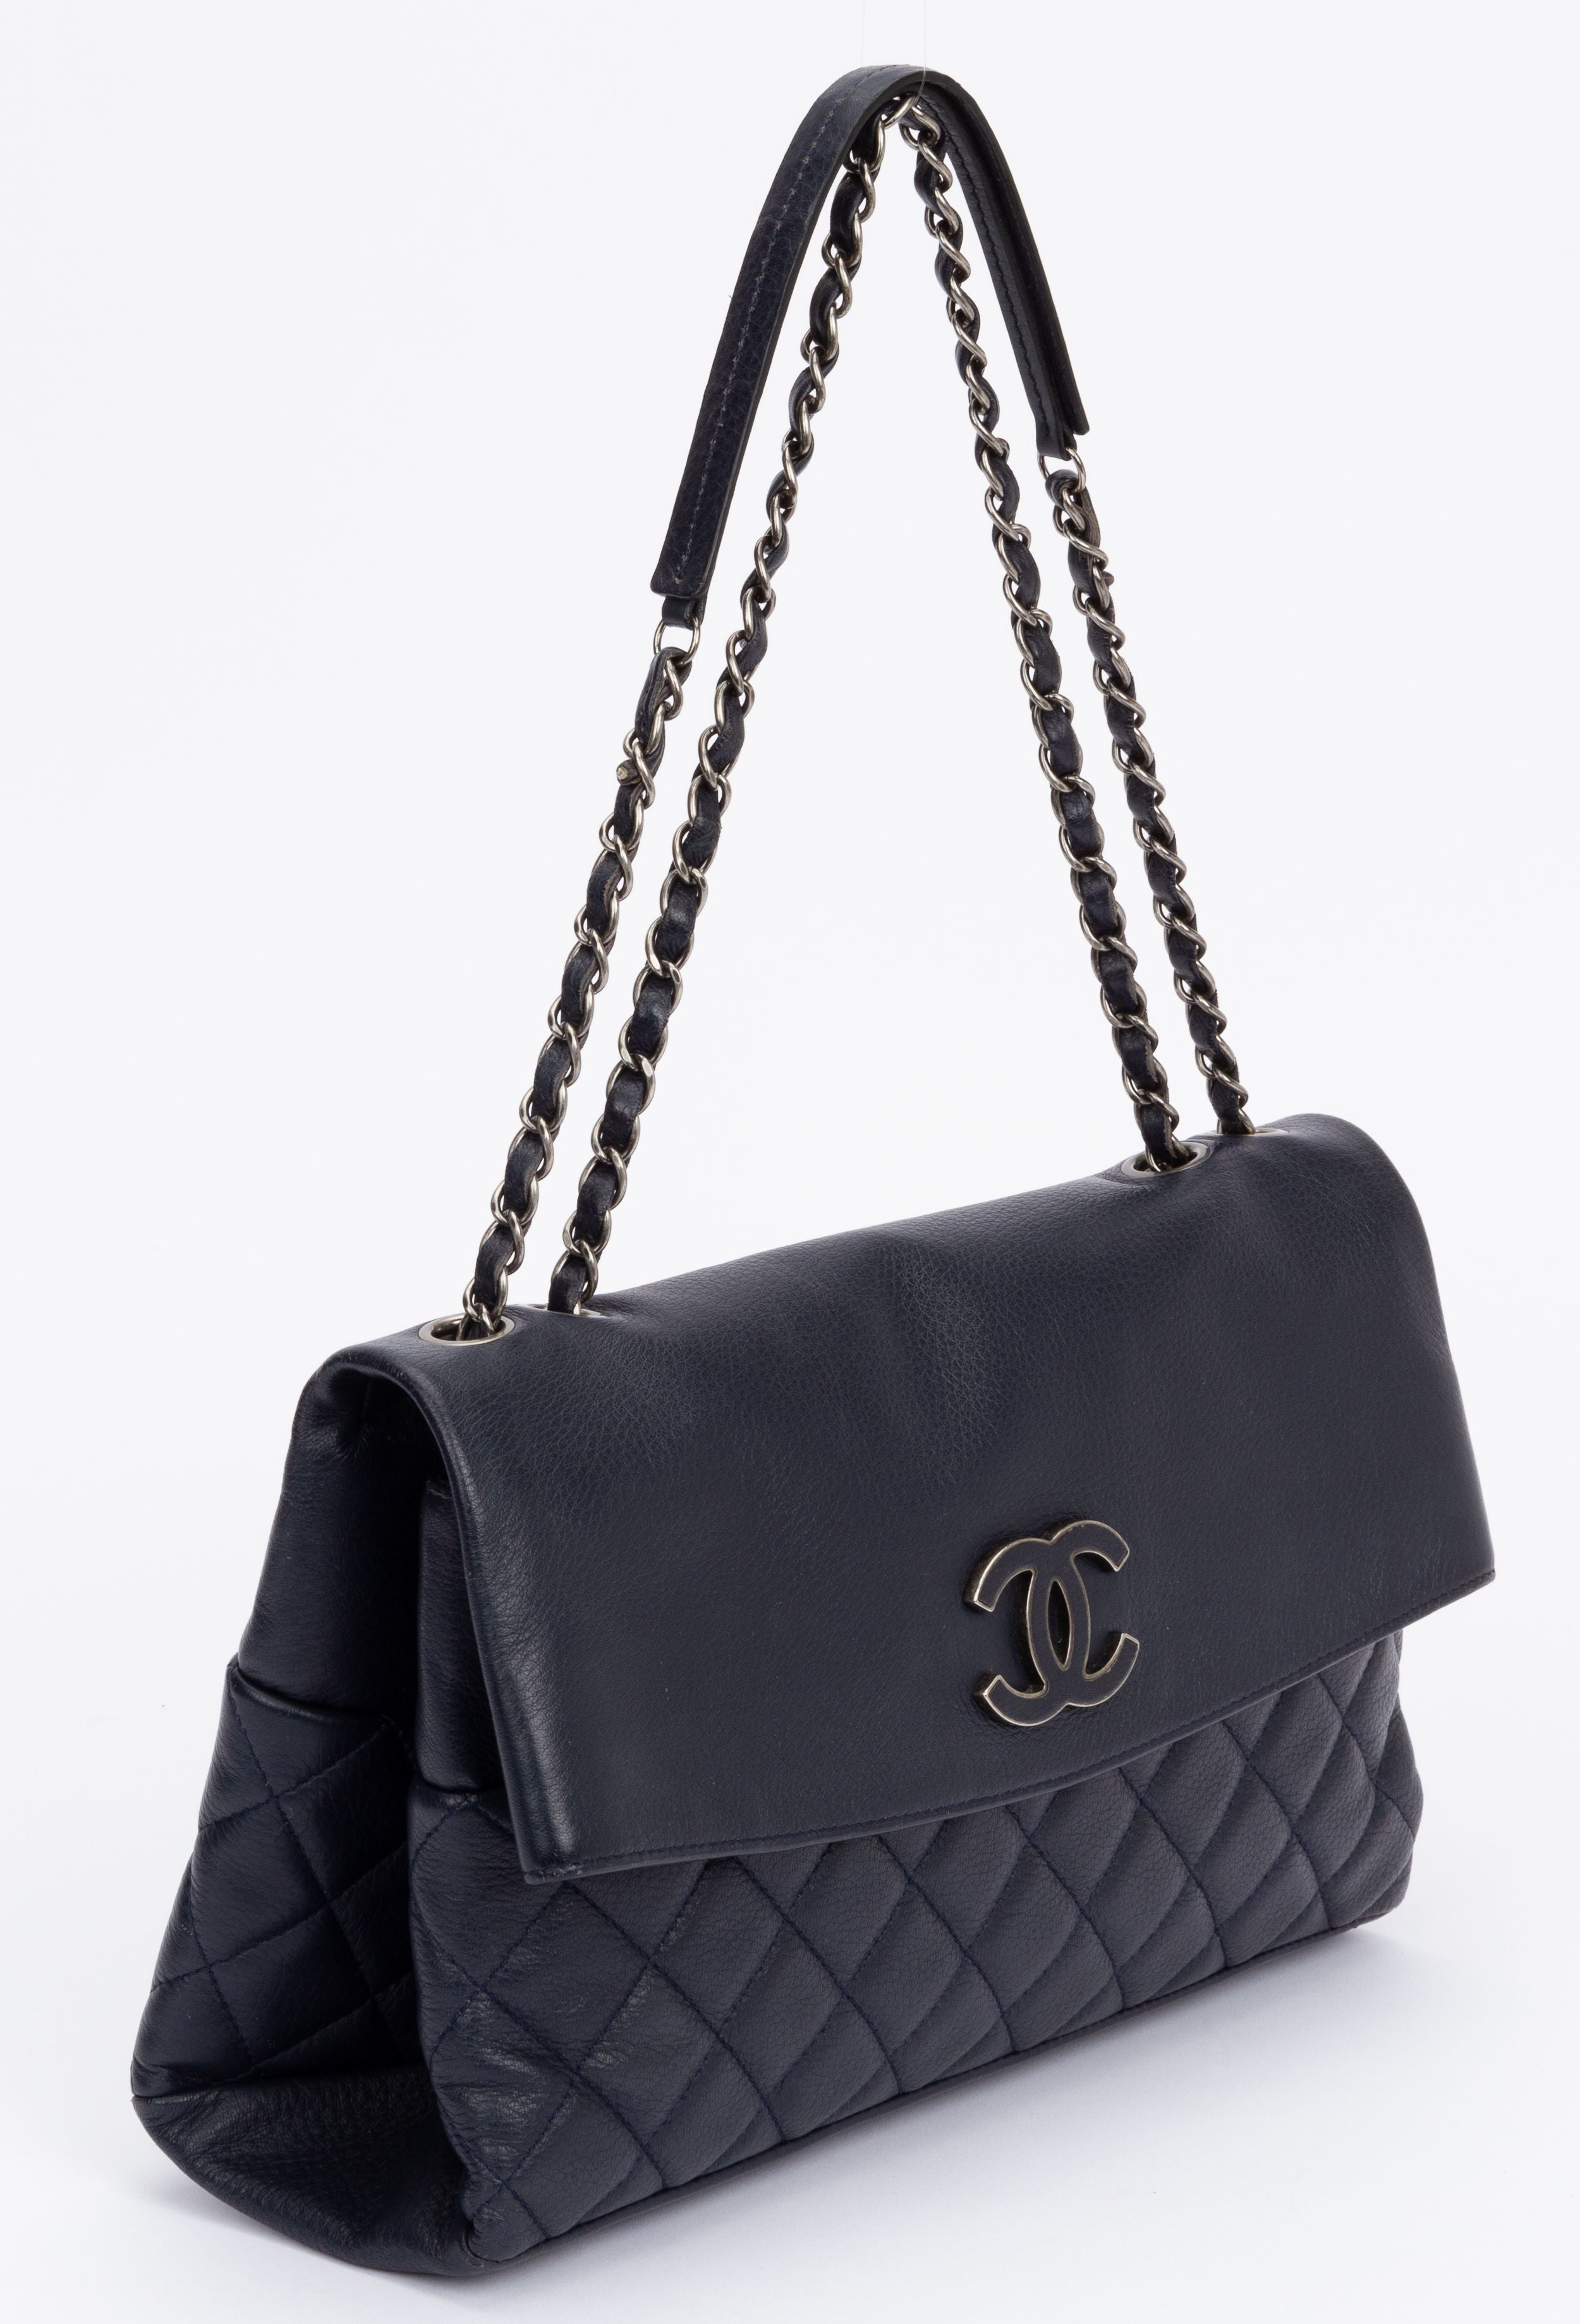 Chanel Blue Butter Lambskin Flap Bag - Vintage Lux